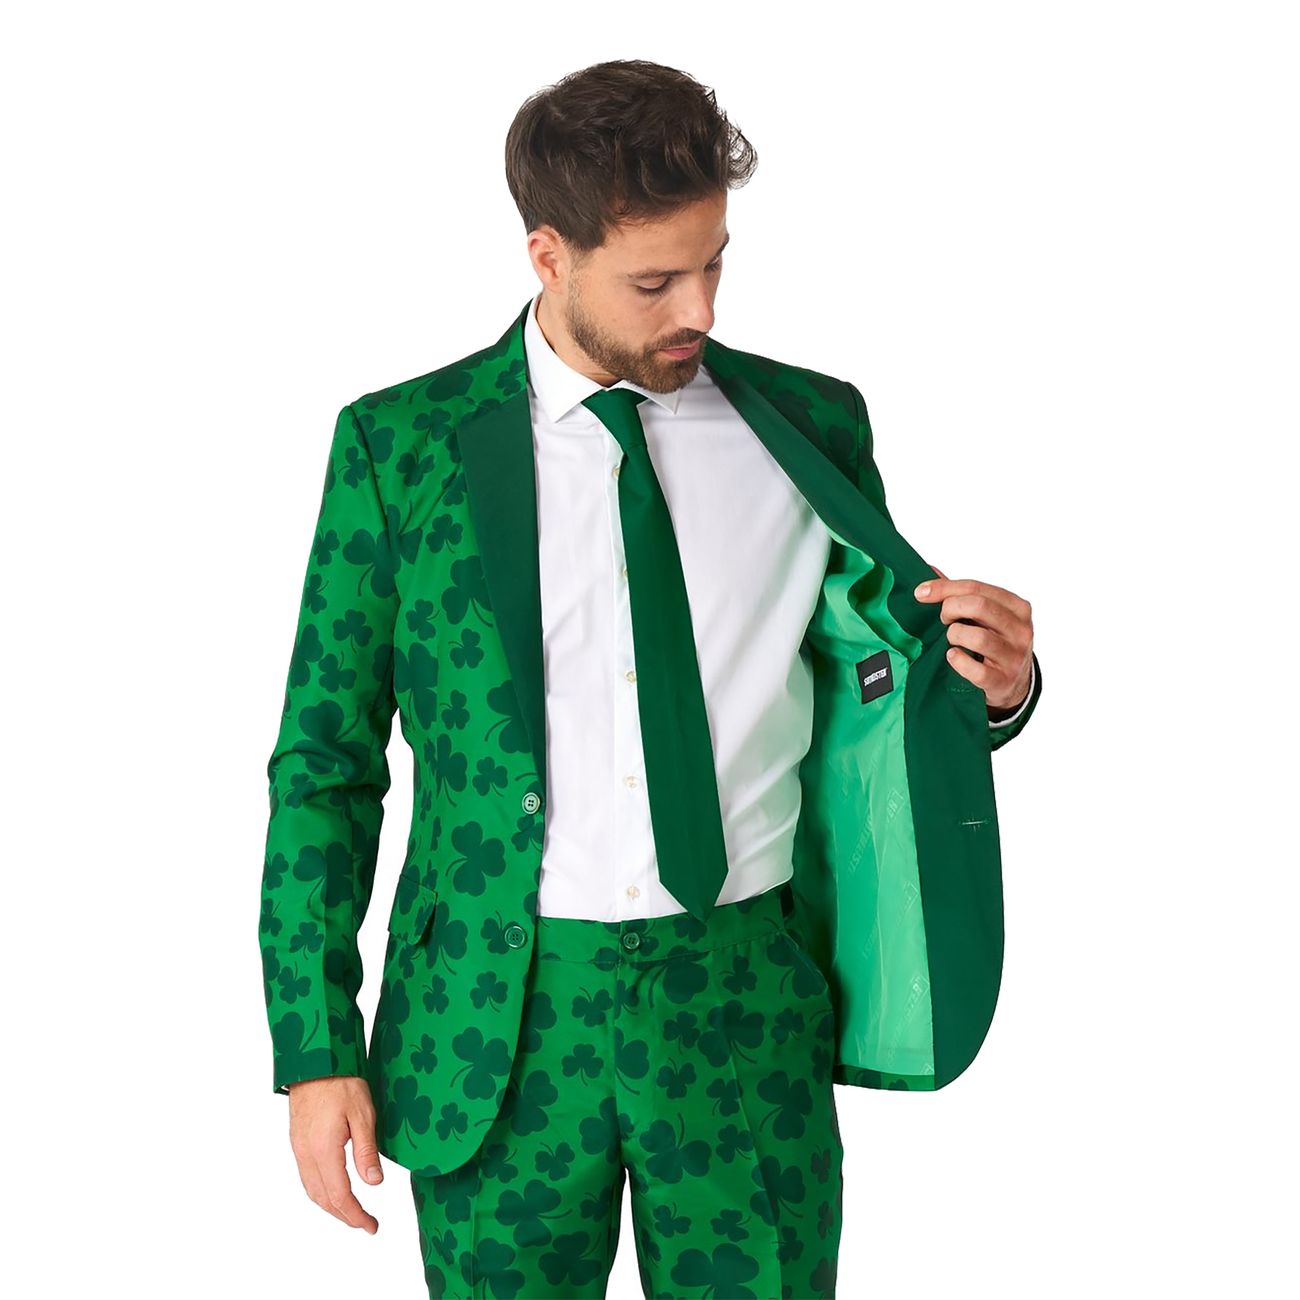 suitmeister-st-patrick-gron-kostym-89999-3